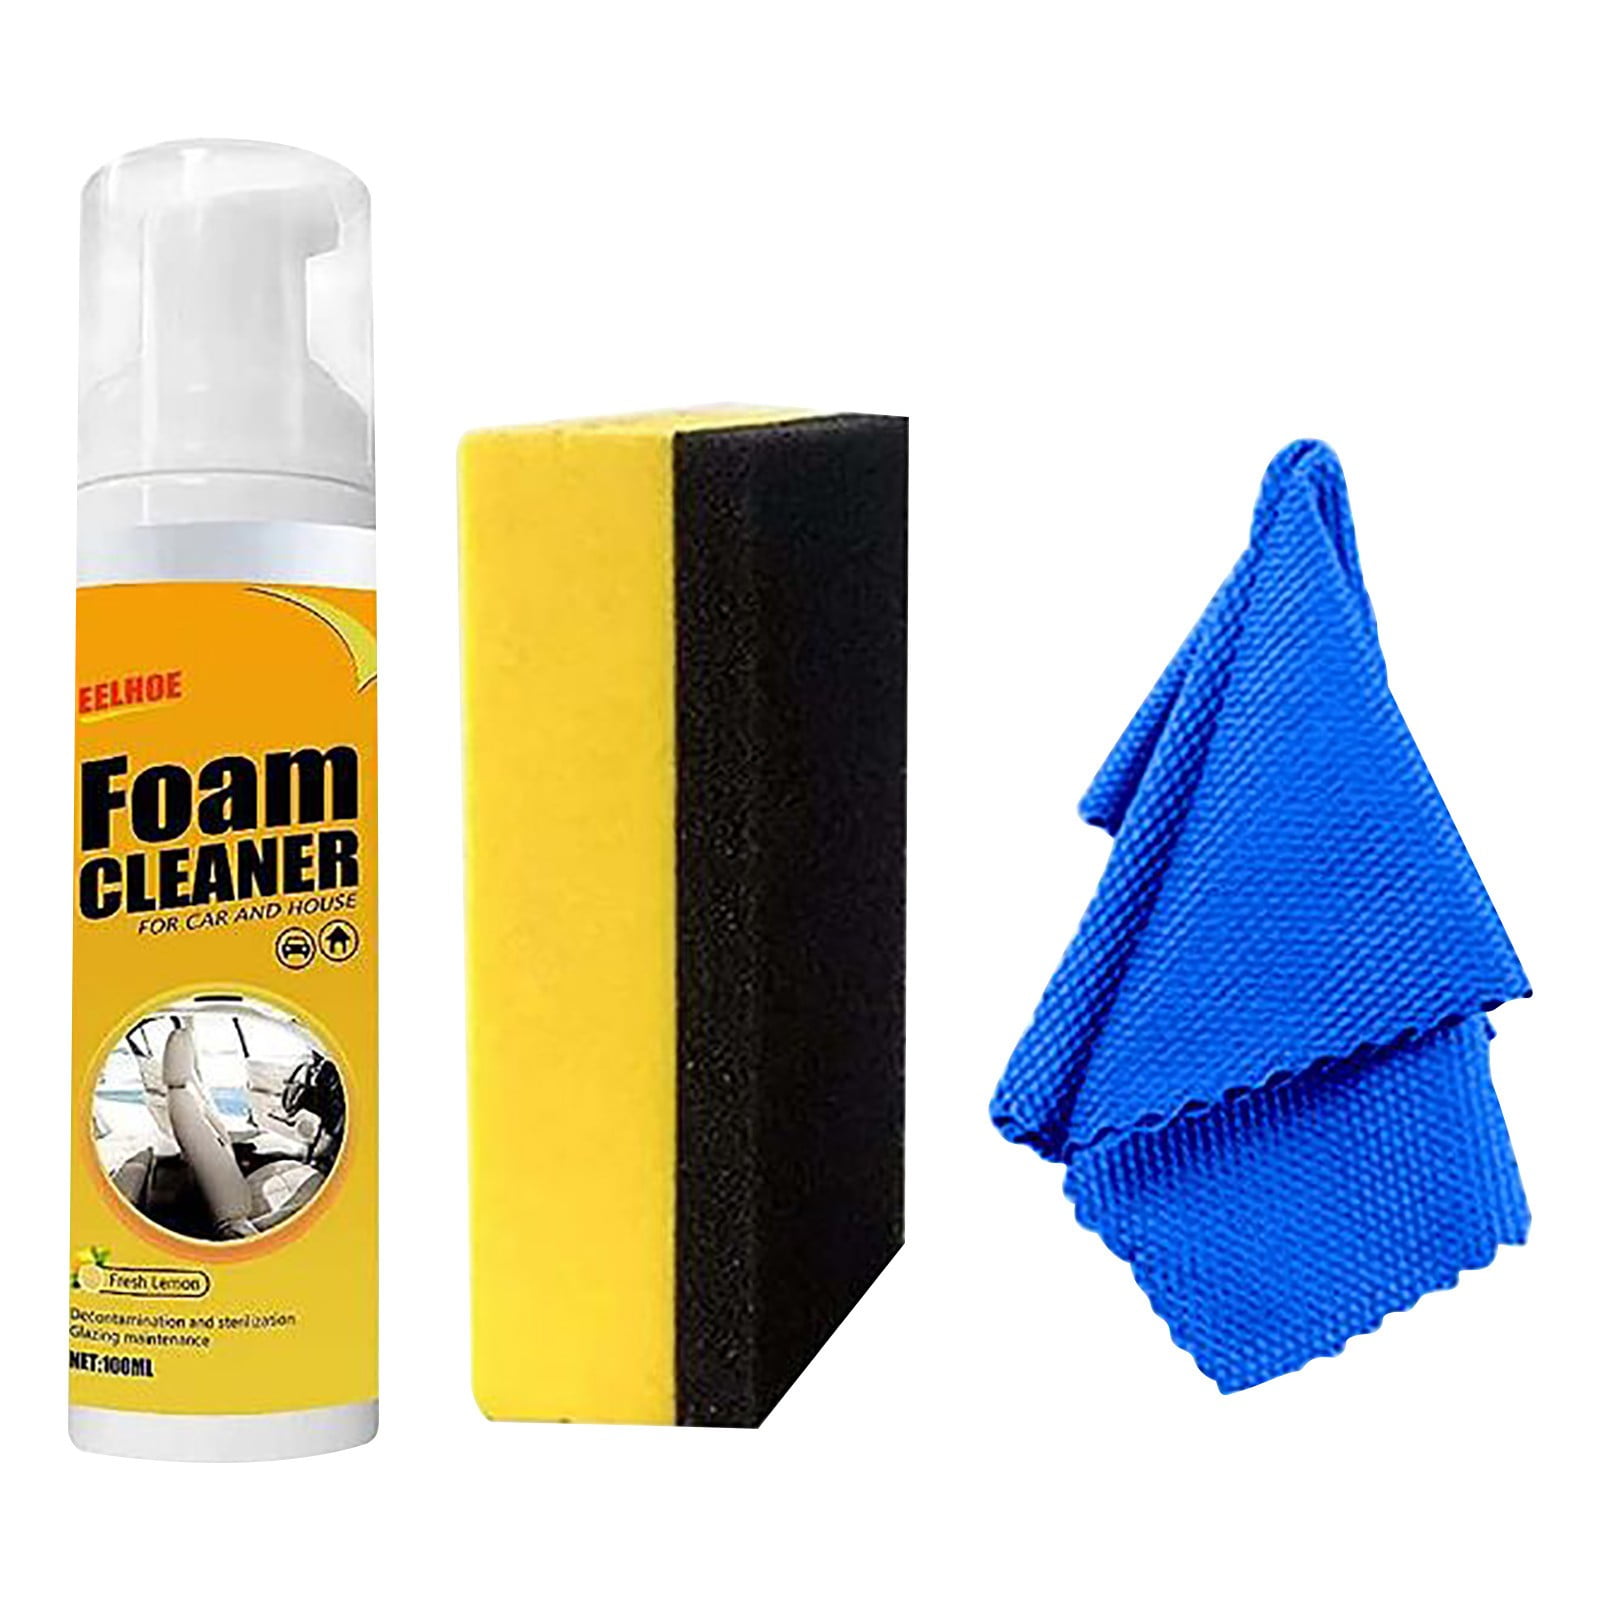 Lopecy-Sta Foam Cleaner All Purpose Foam Cleaner for Car 1x Foam